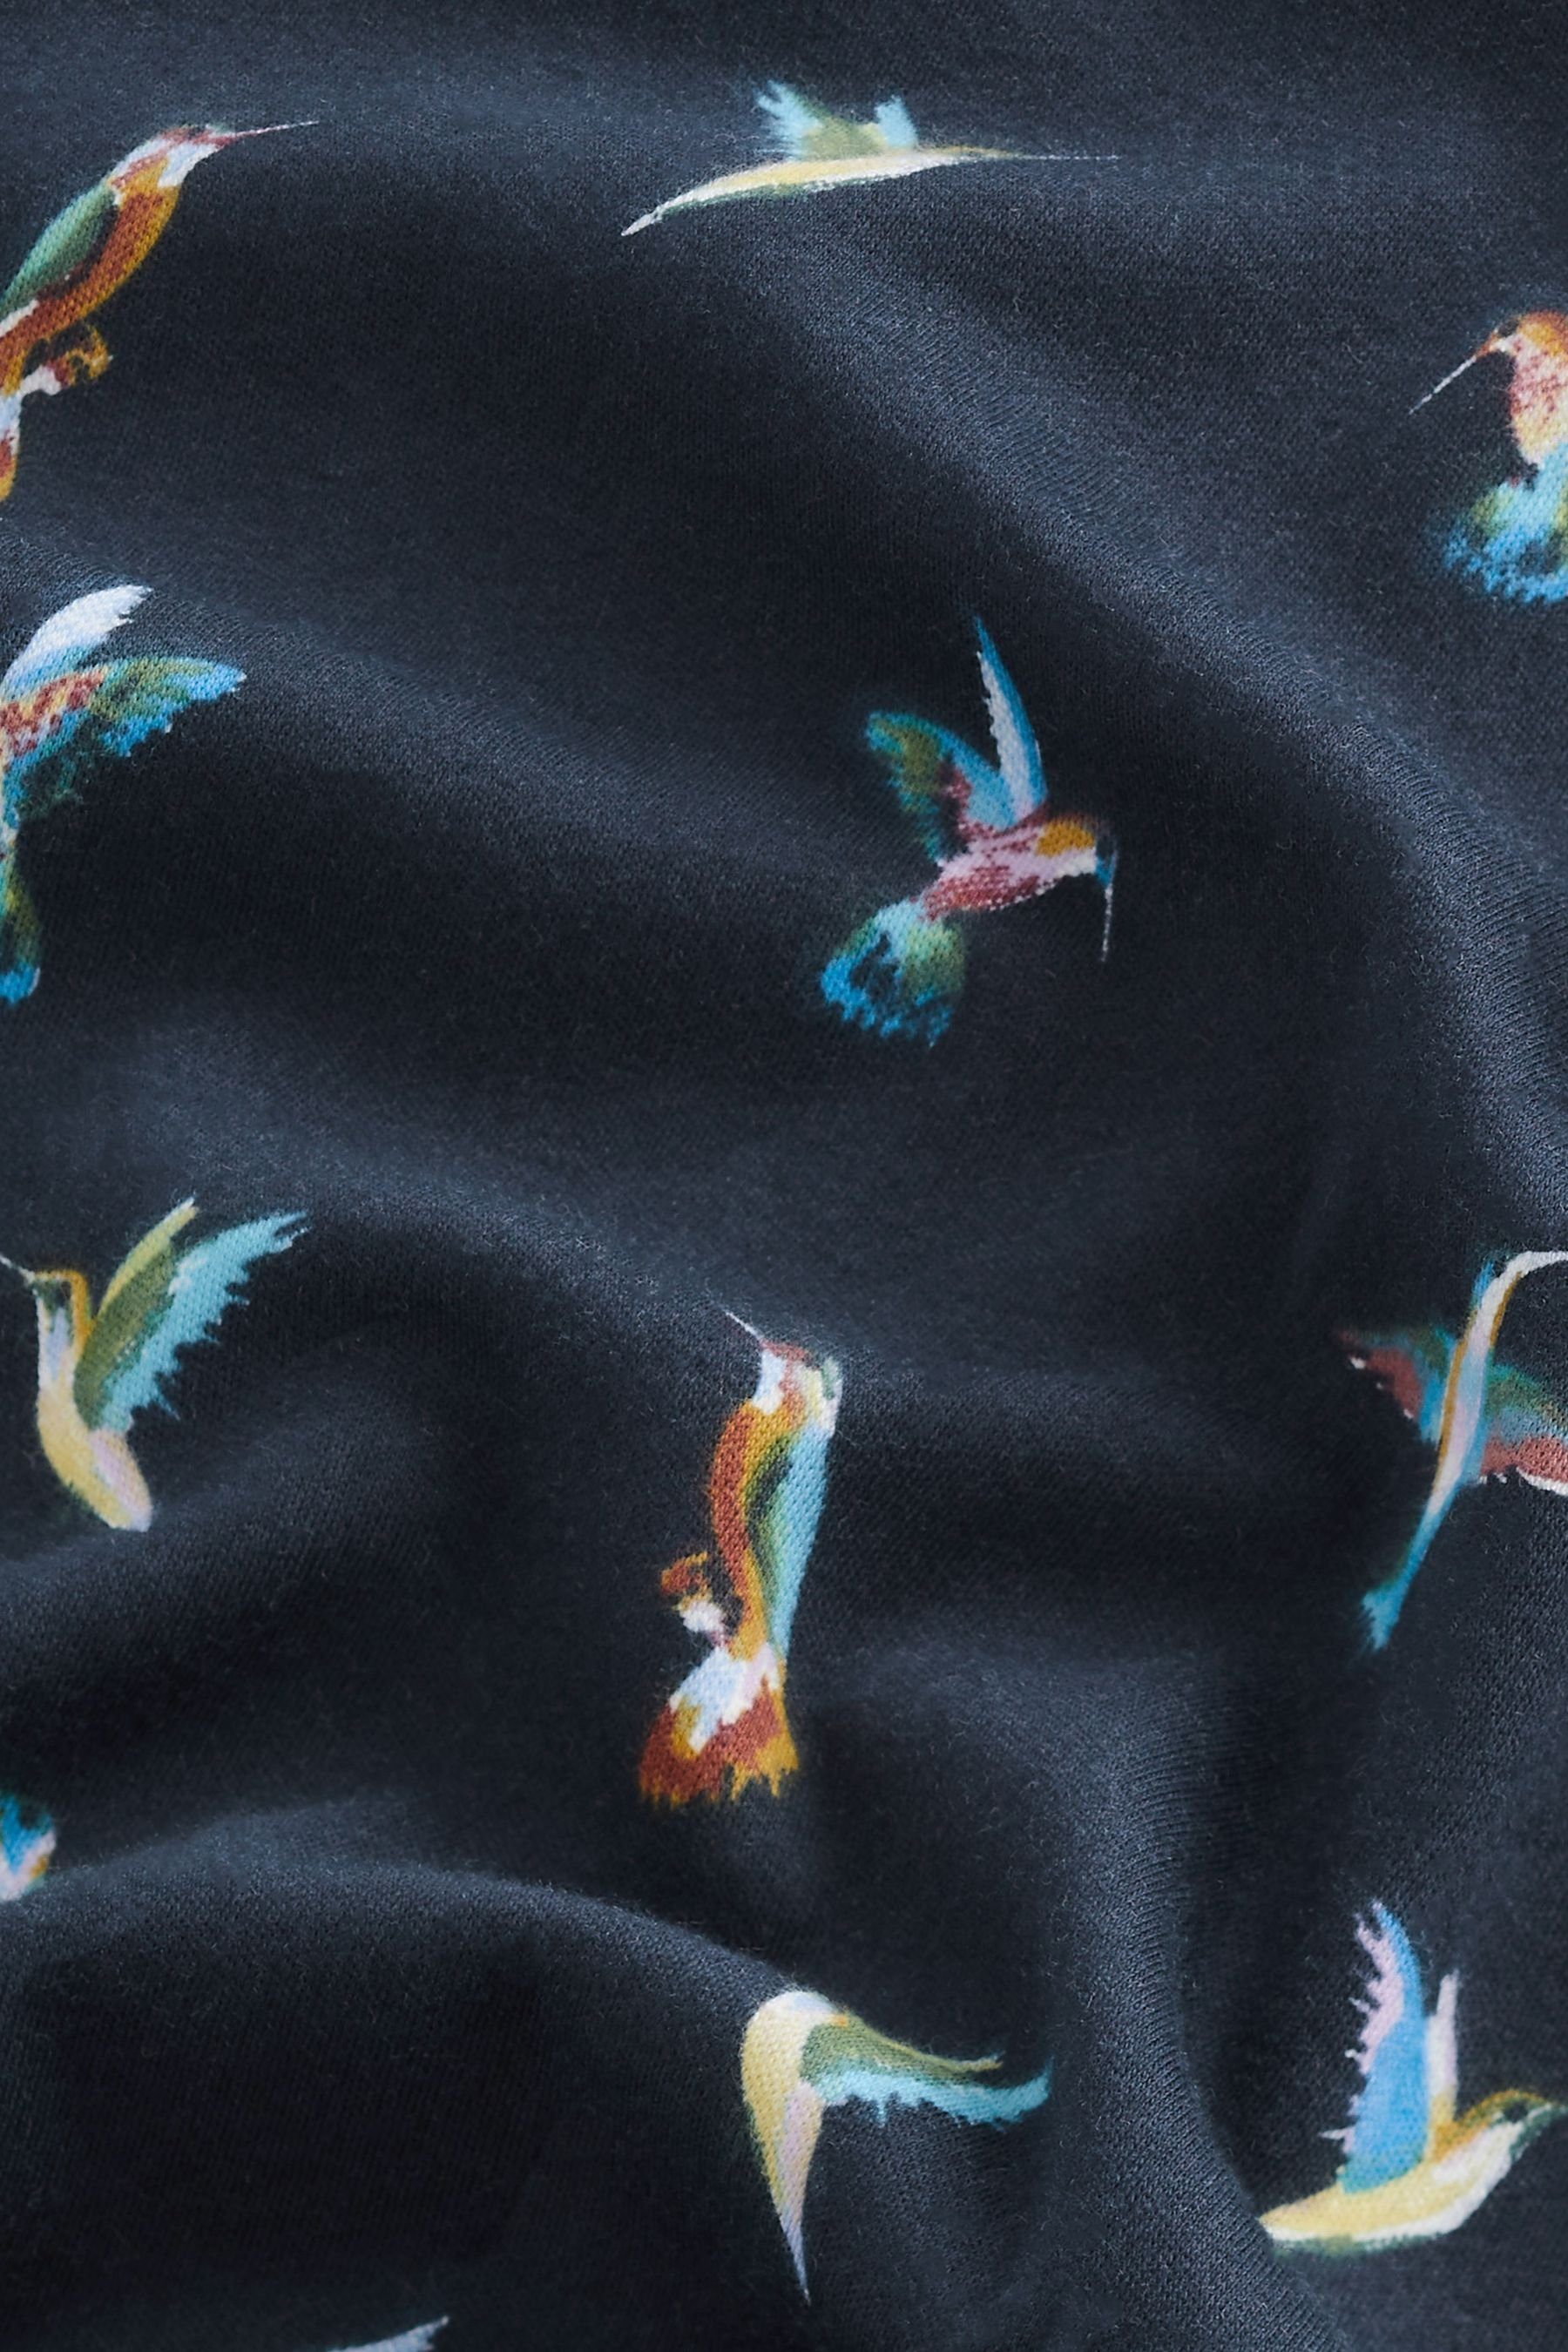 Blue (1-tlg) Navy Hummingbird Poloshirt Polo-Shirt Bedrucktes Next